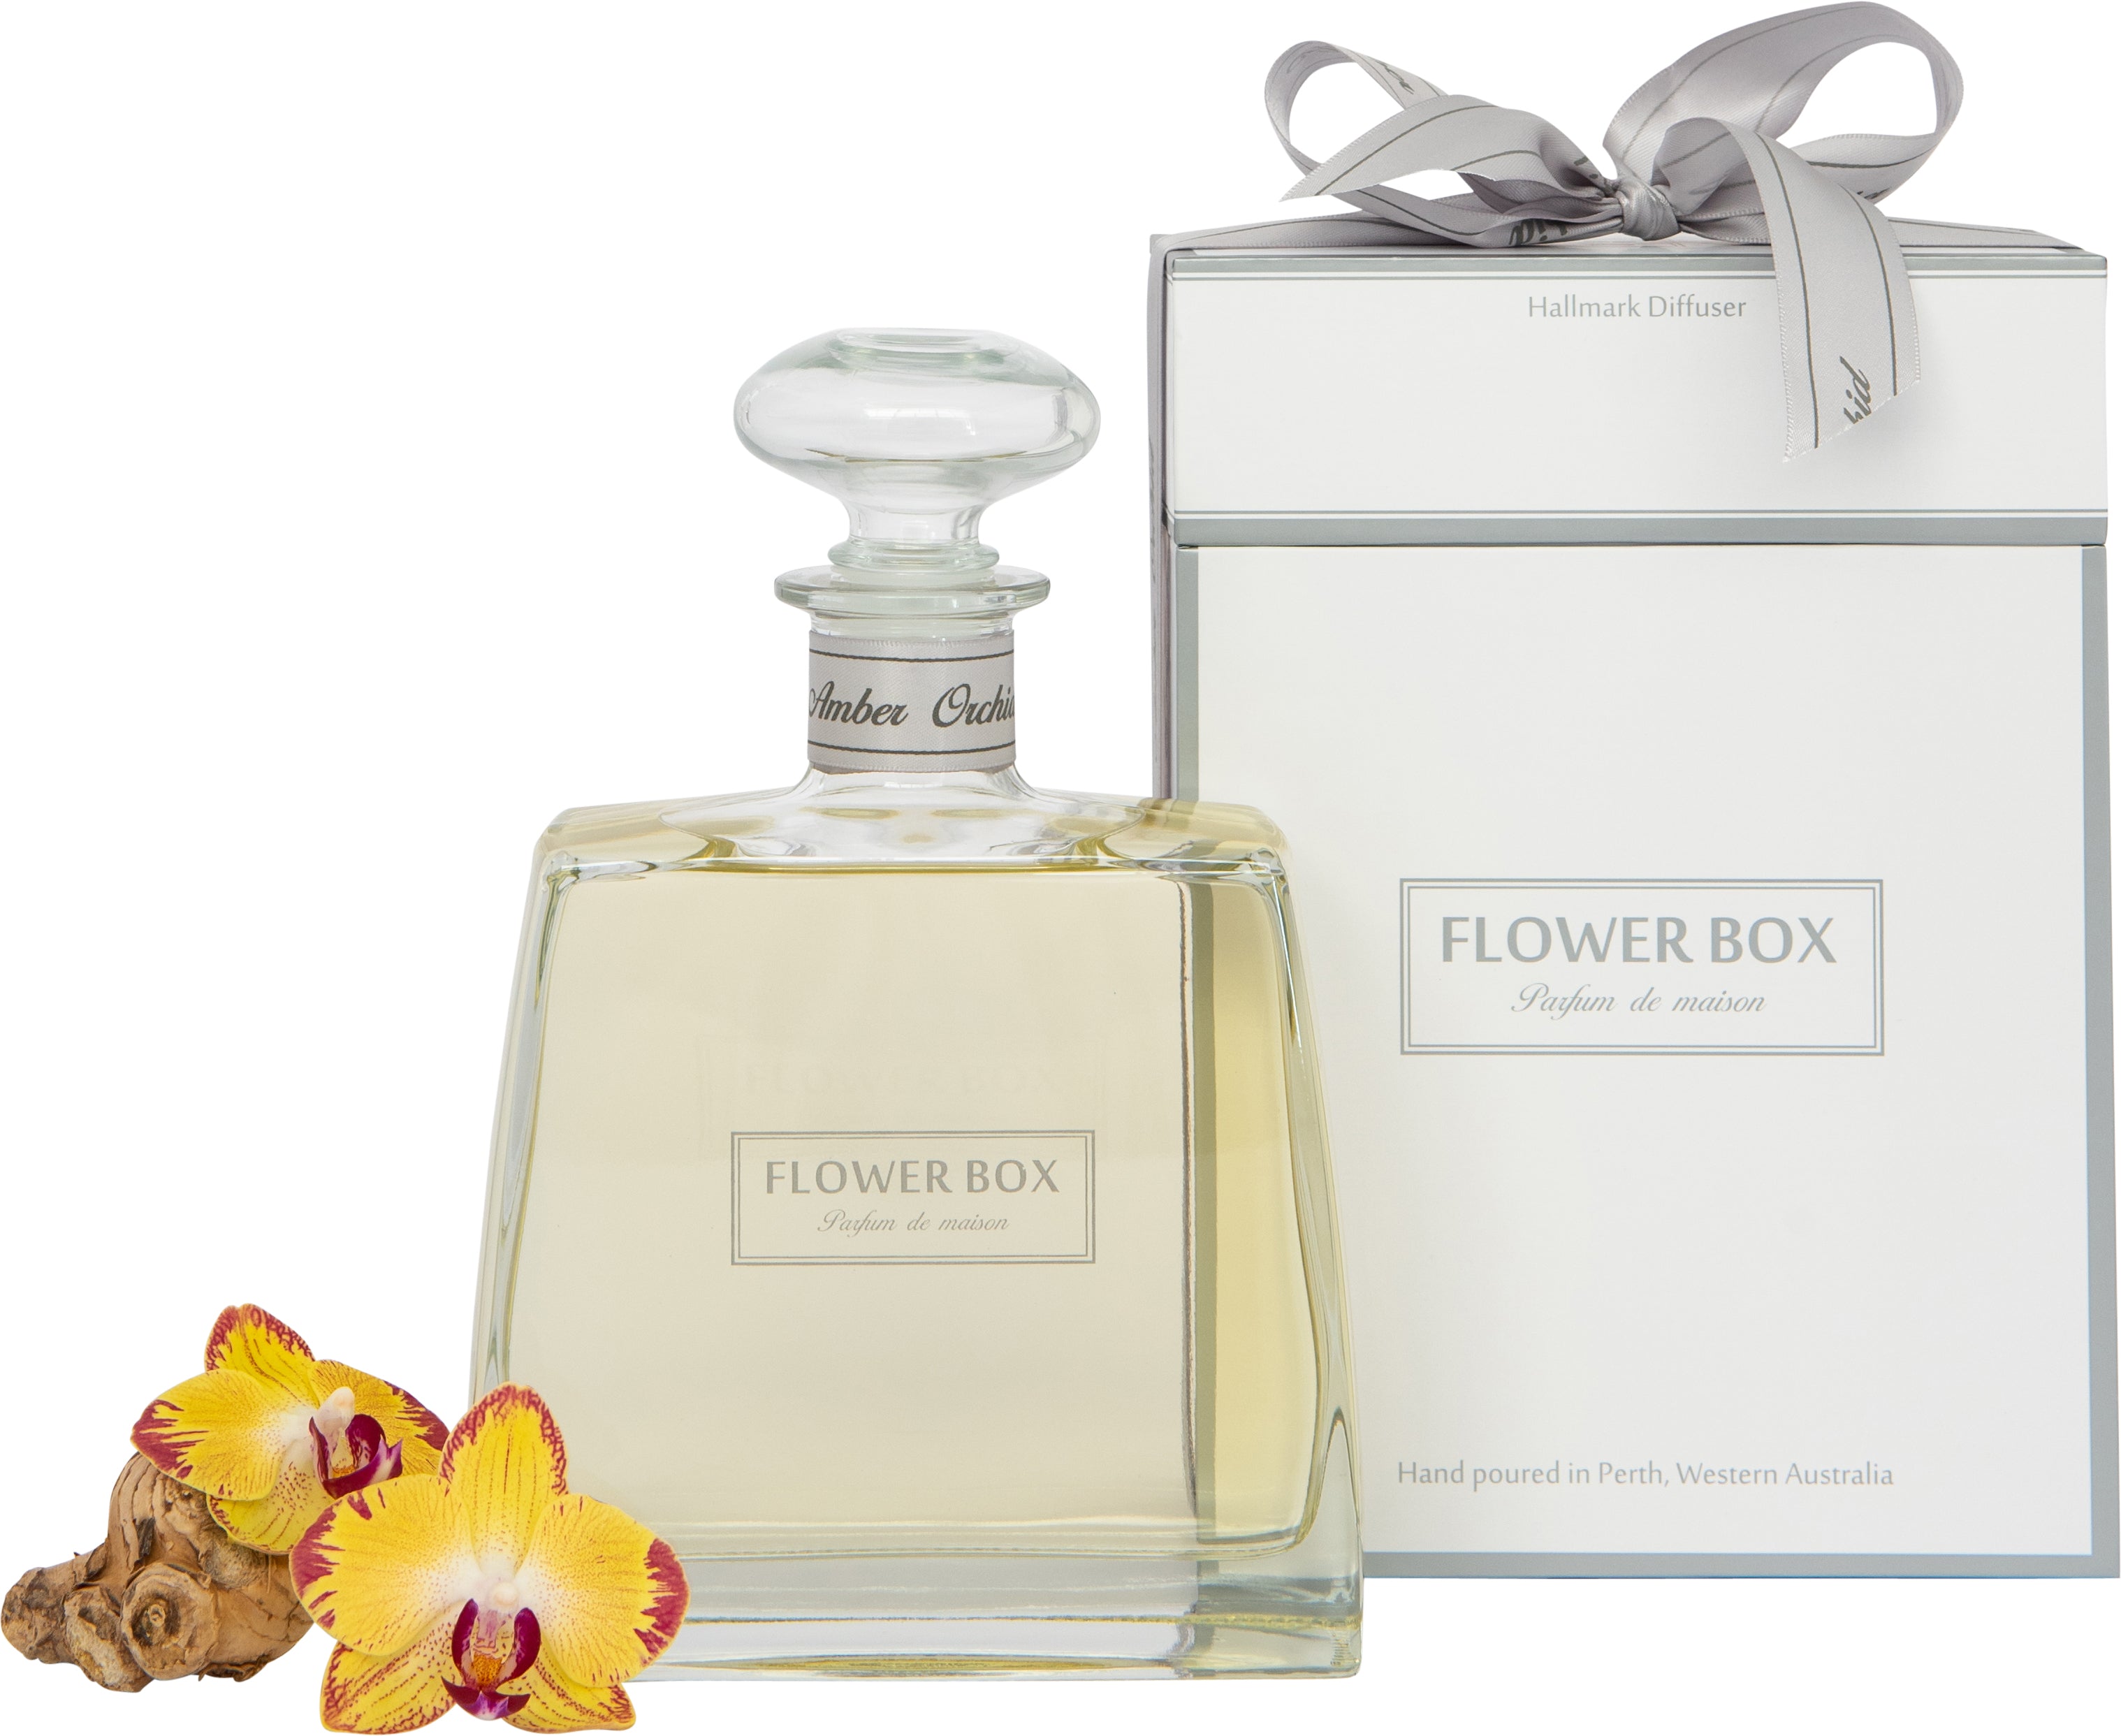 Amber Orchid Flower Box Hallmark Diffuser